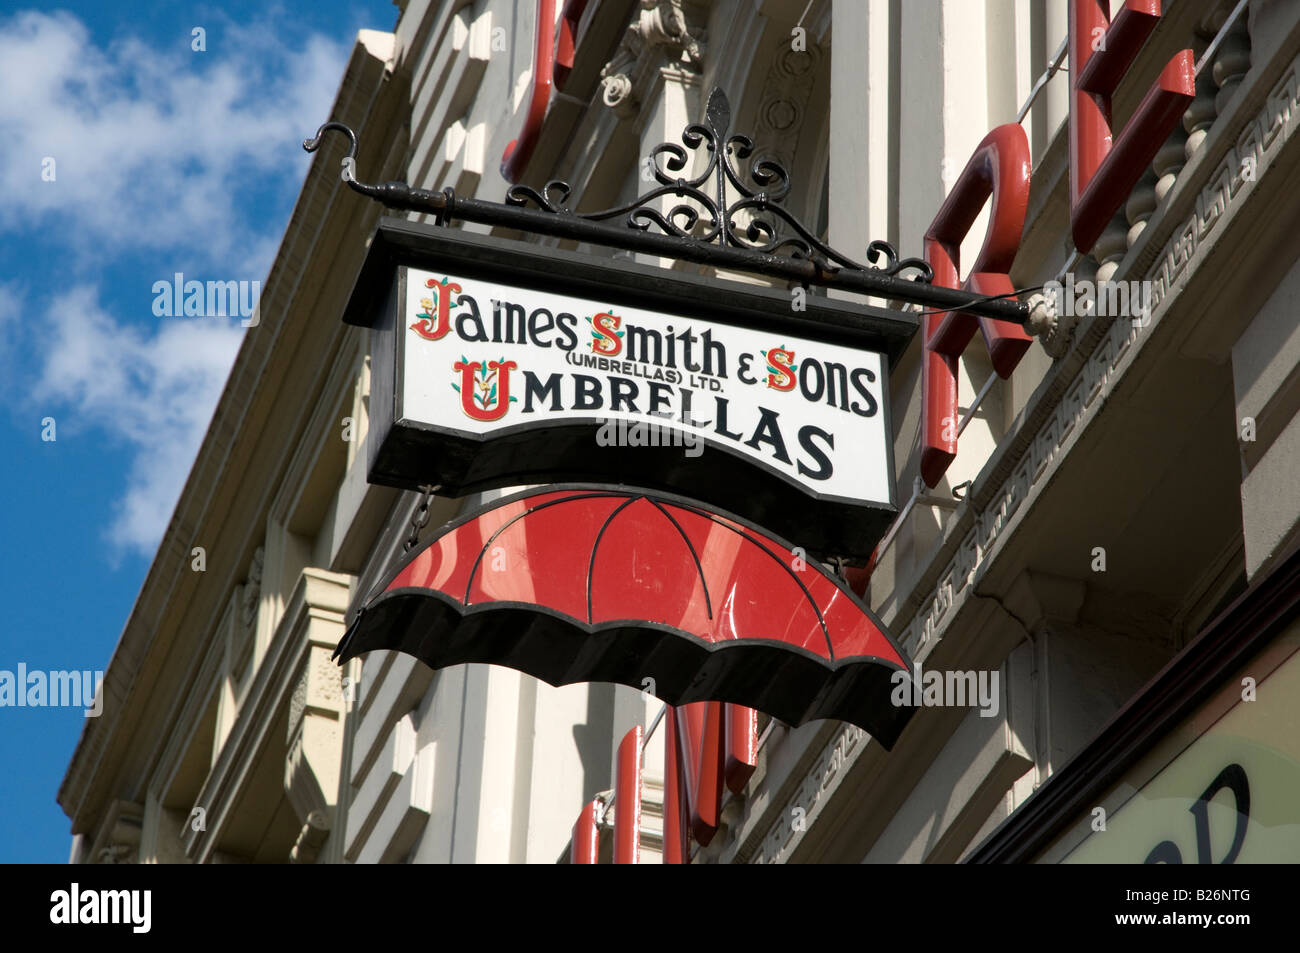 James Smith und Söhne Sonnenschirme, London England UK Stockfoto